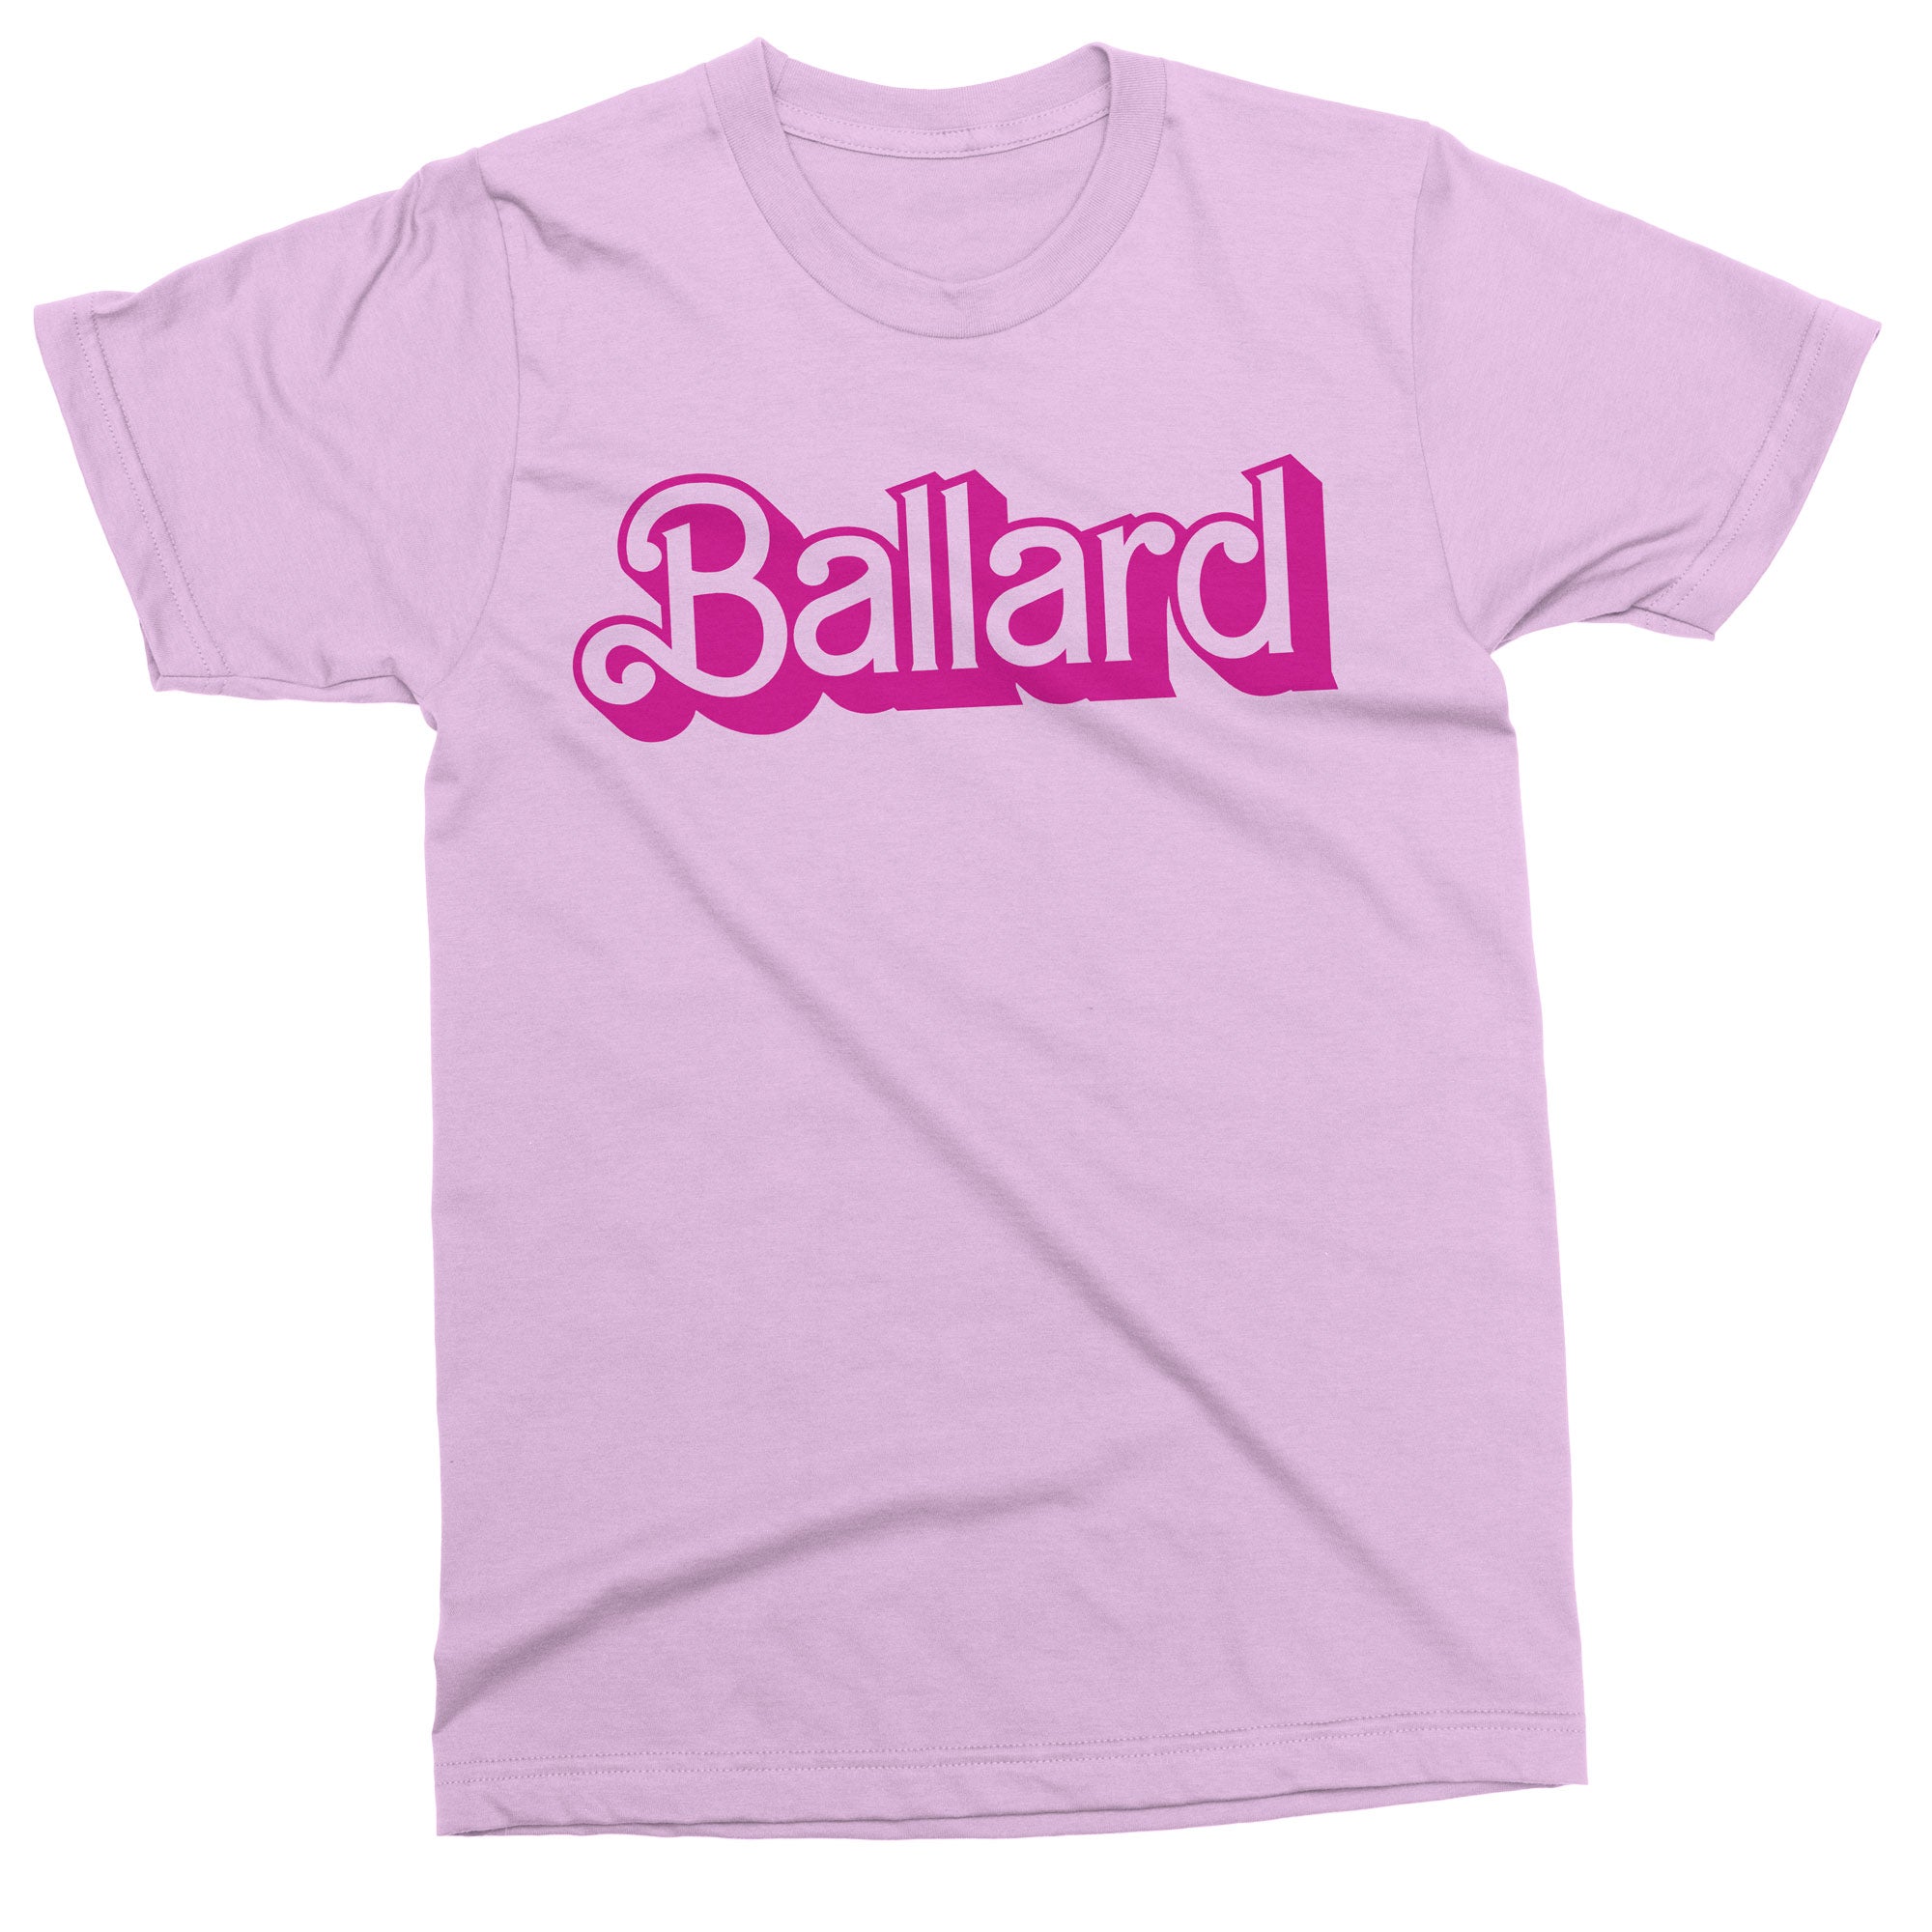 Ballard Barbie tshirt